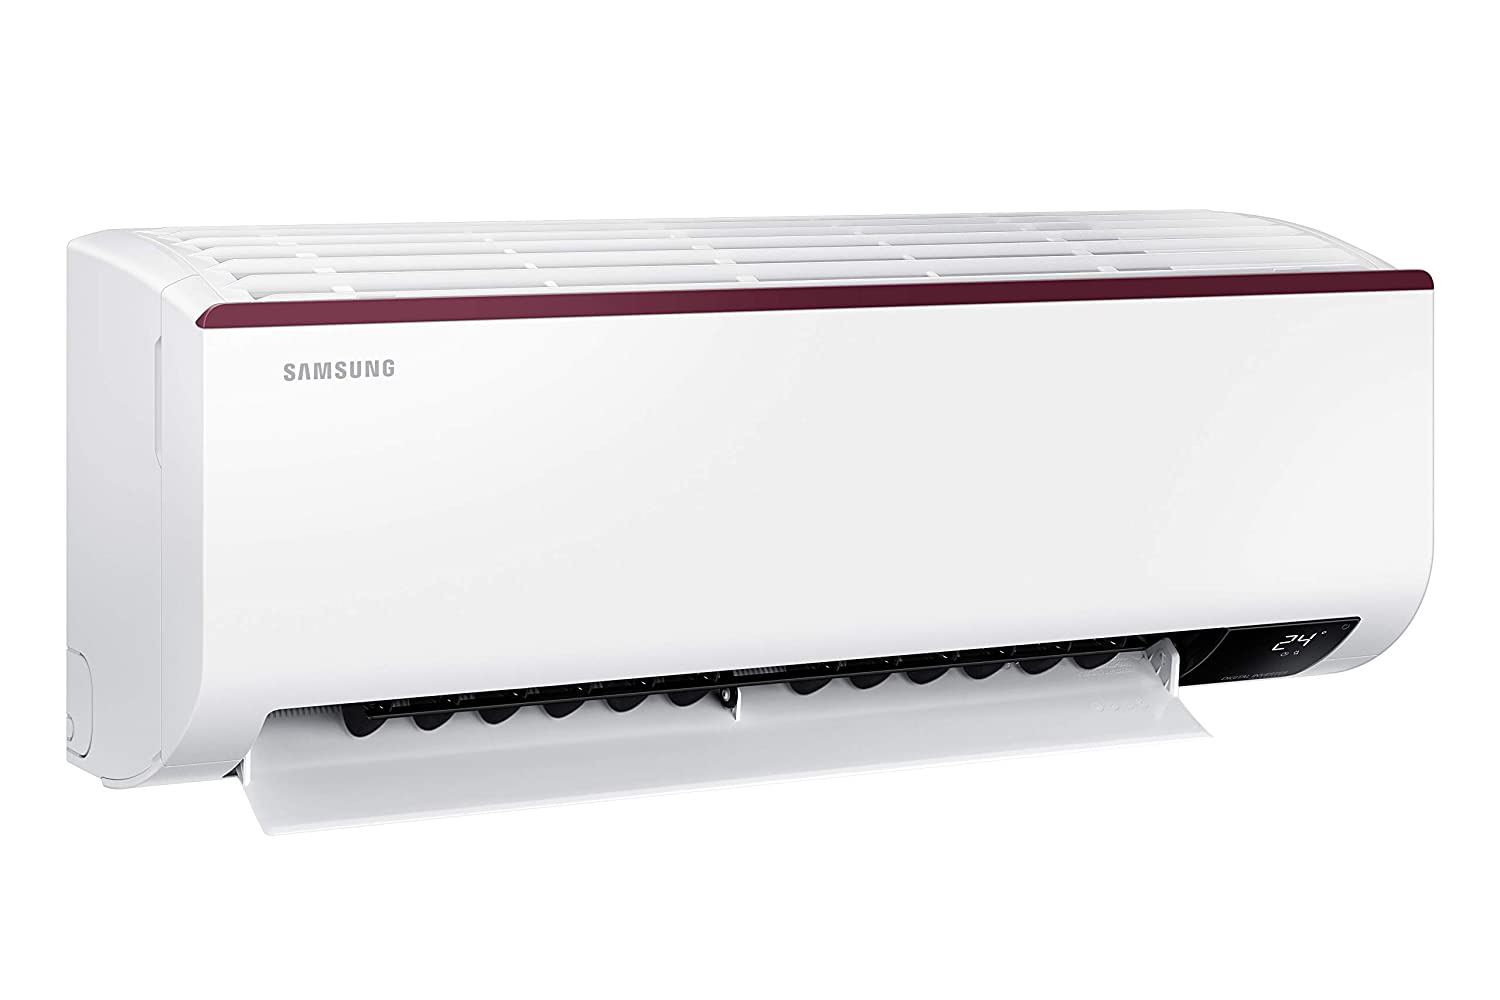 Samsung 1.5 Ton 3 Star Inverter Split AC (Copper, AR18AY3ZBPG, White)